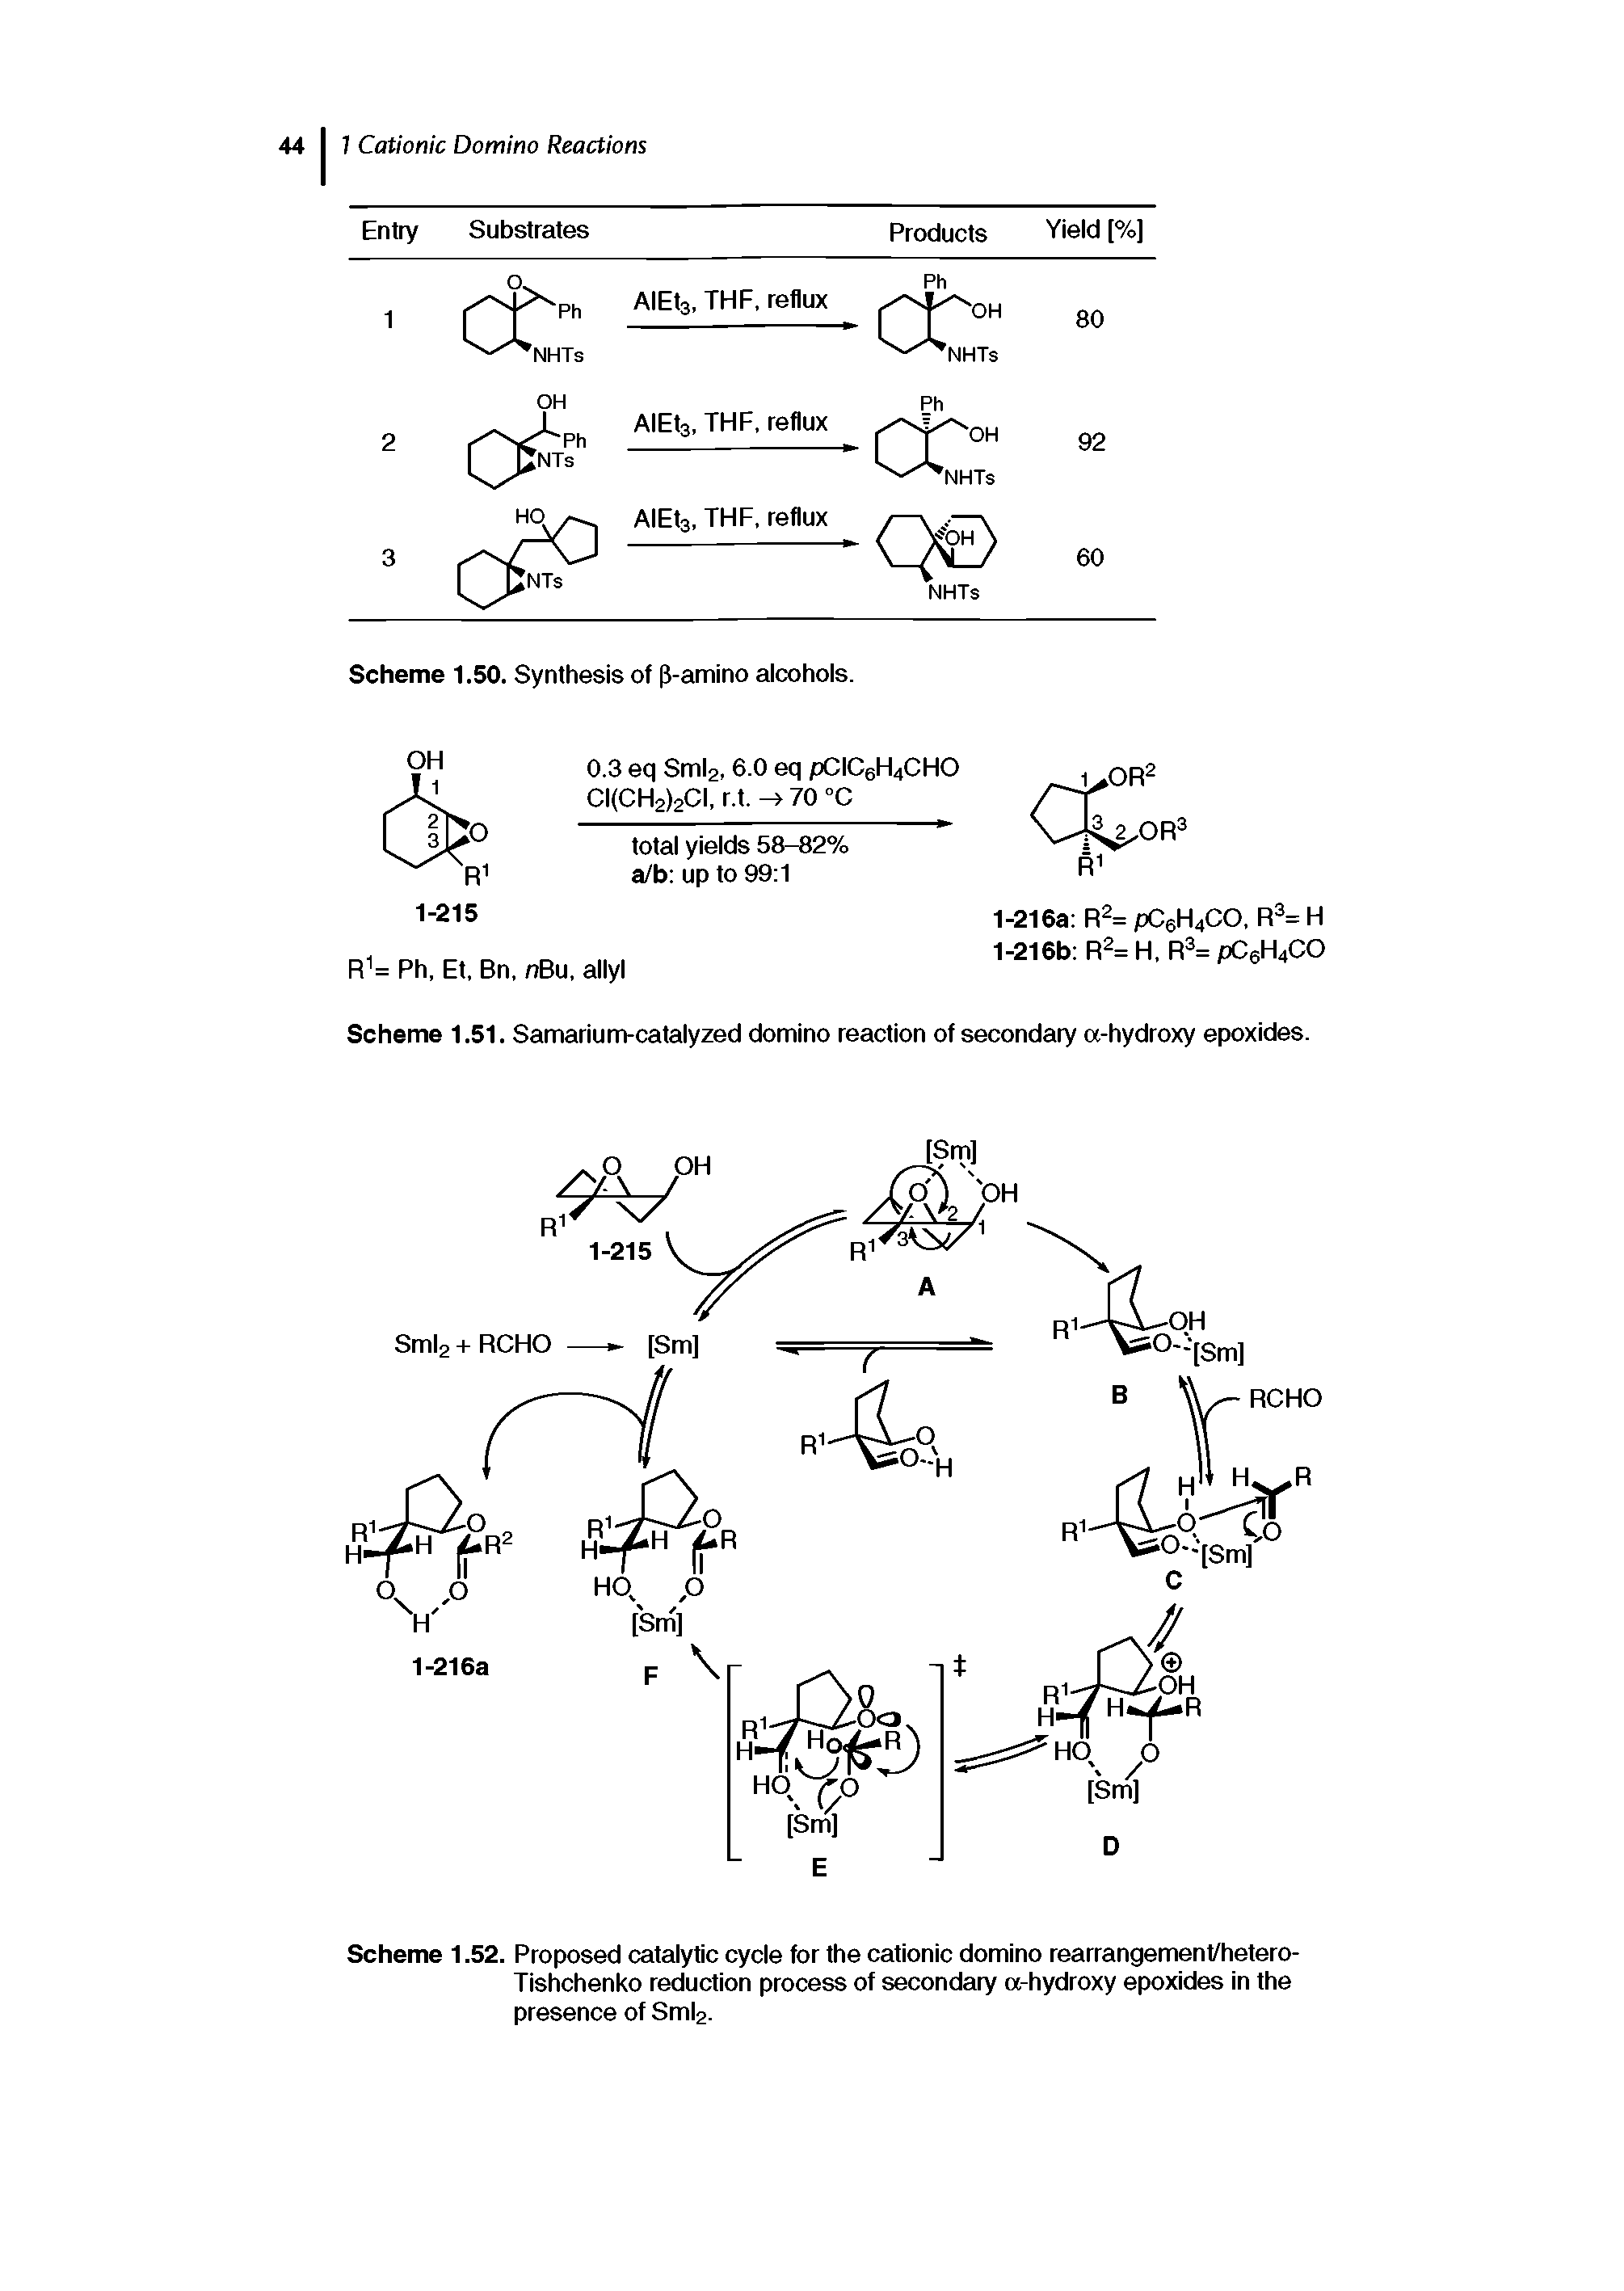 Scheme 1.51. Samarium-catalyzed domino reaction of secondary a-hydroxy epoxides.